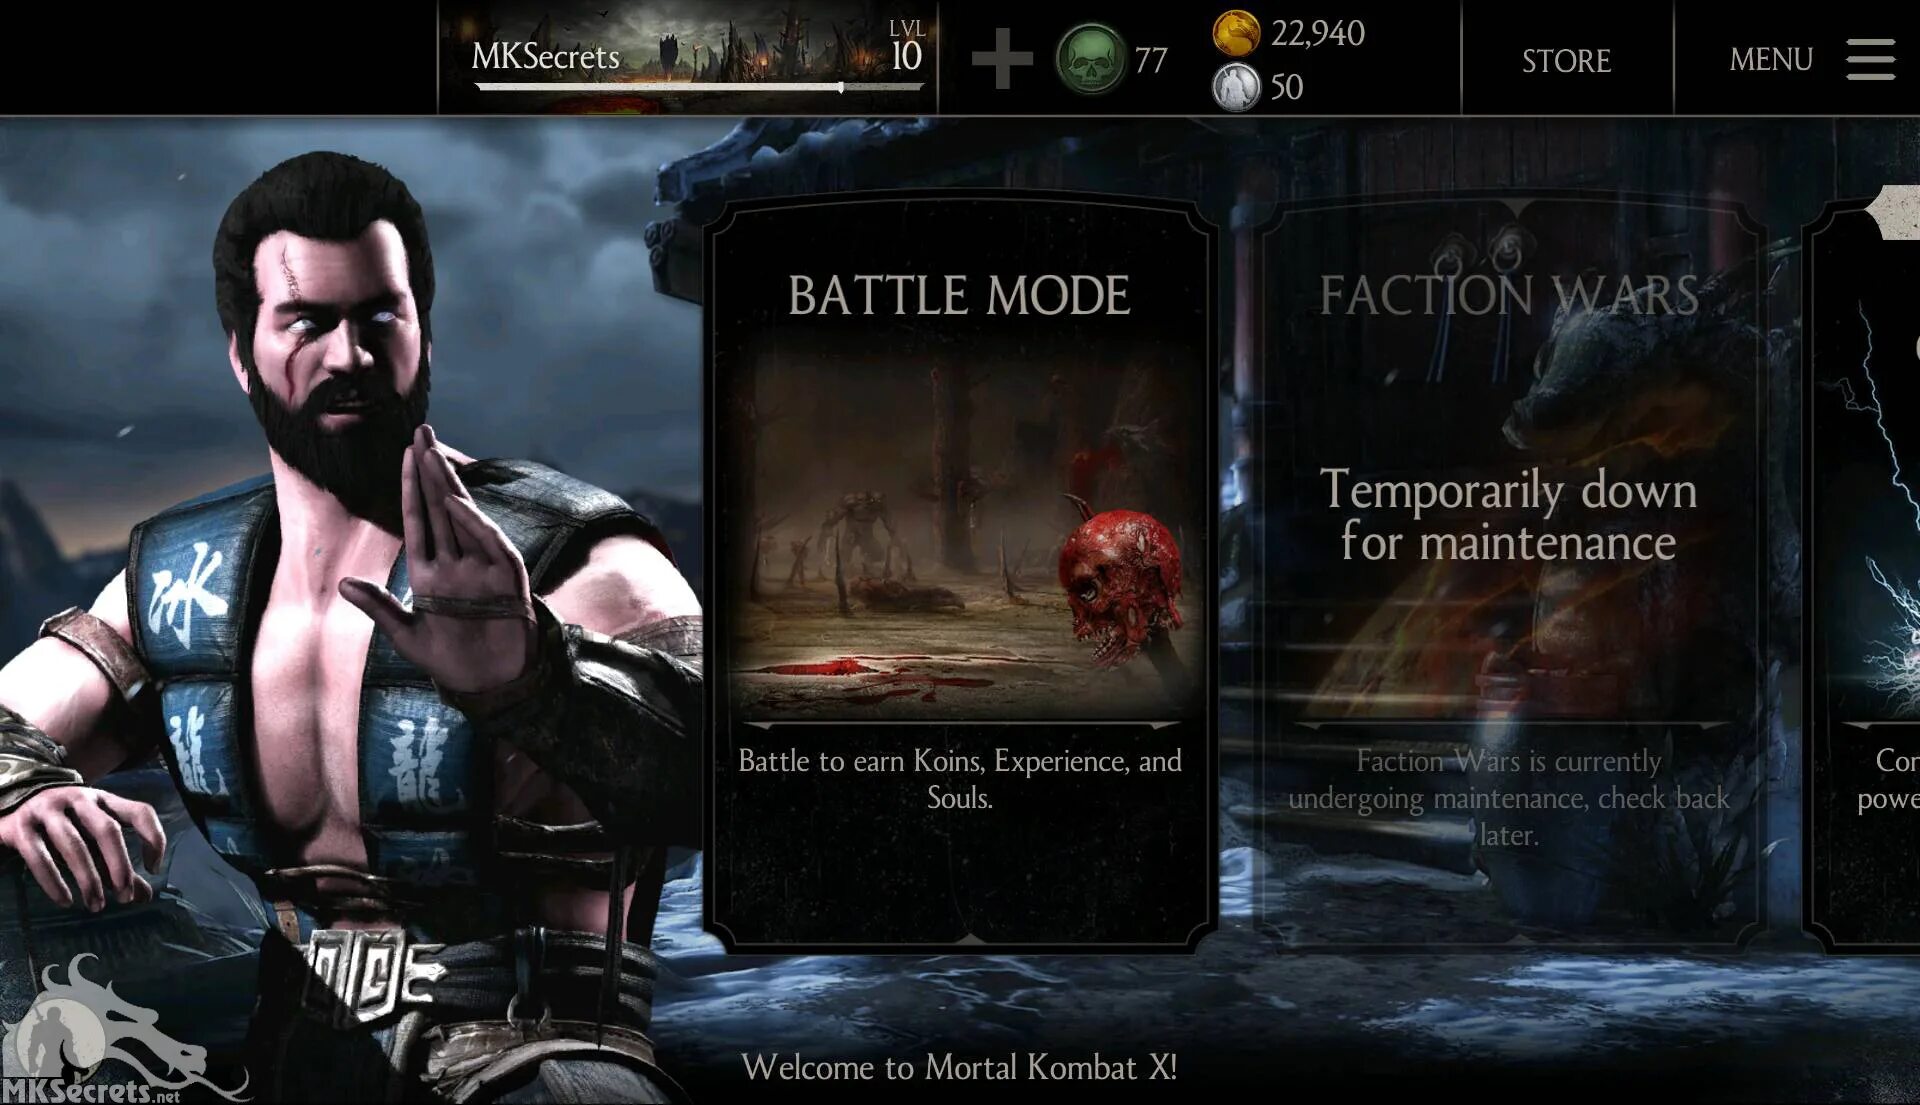 Мортал комбат мобильный. Меню мортал комбат 10. Mortal Kombat x mobile версия 1.1.0. МК Х мобайл. Mortal Kombat 10 главное меню.